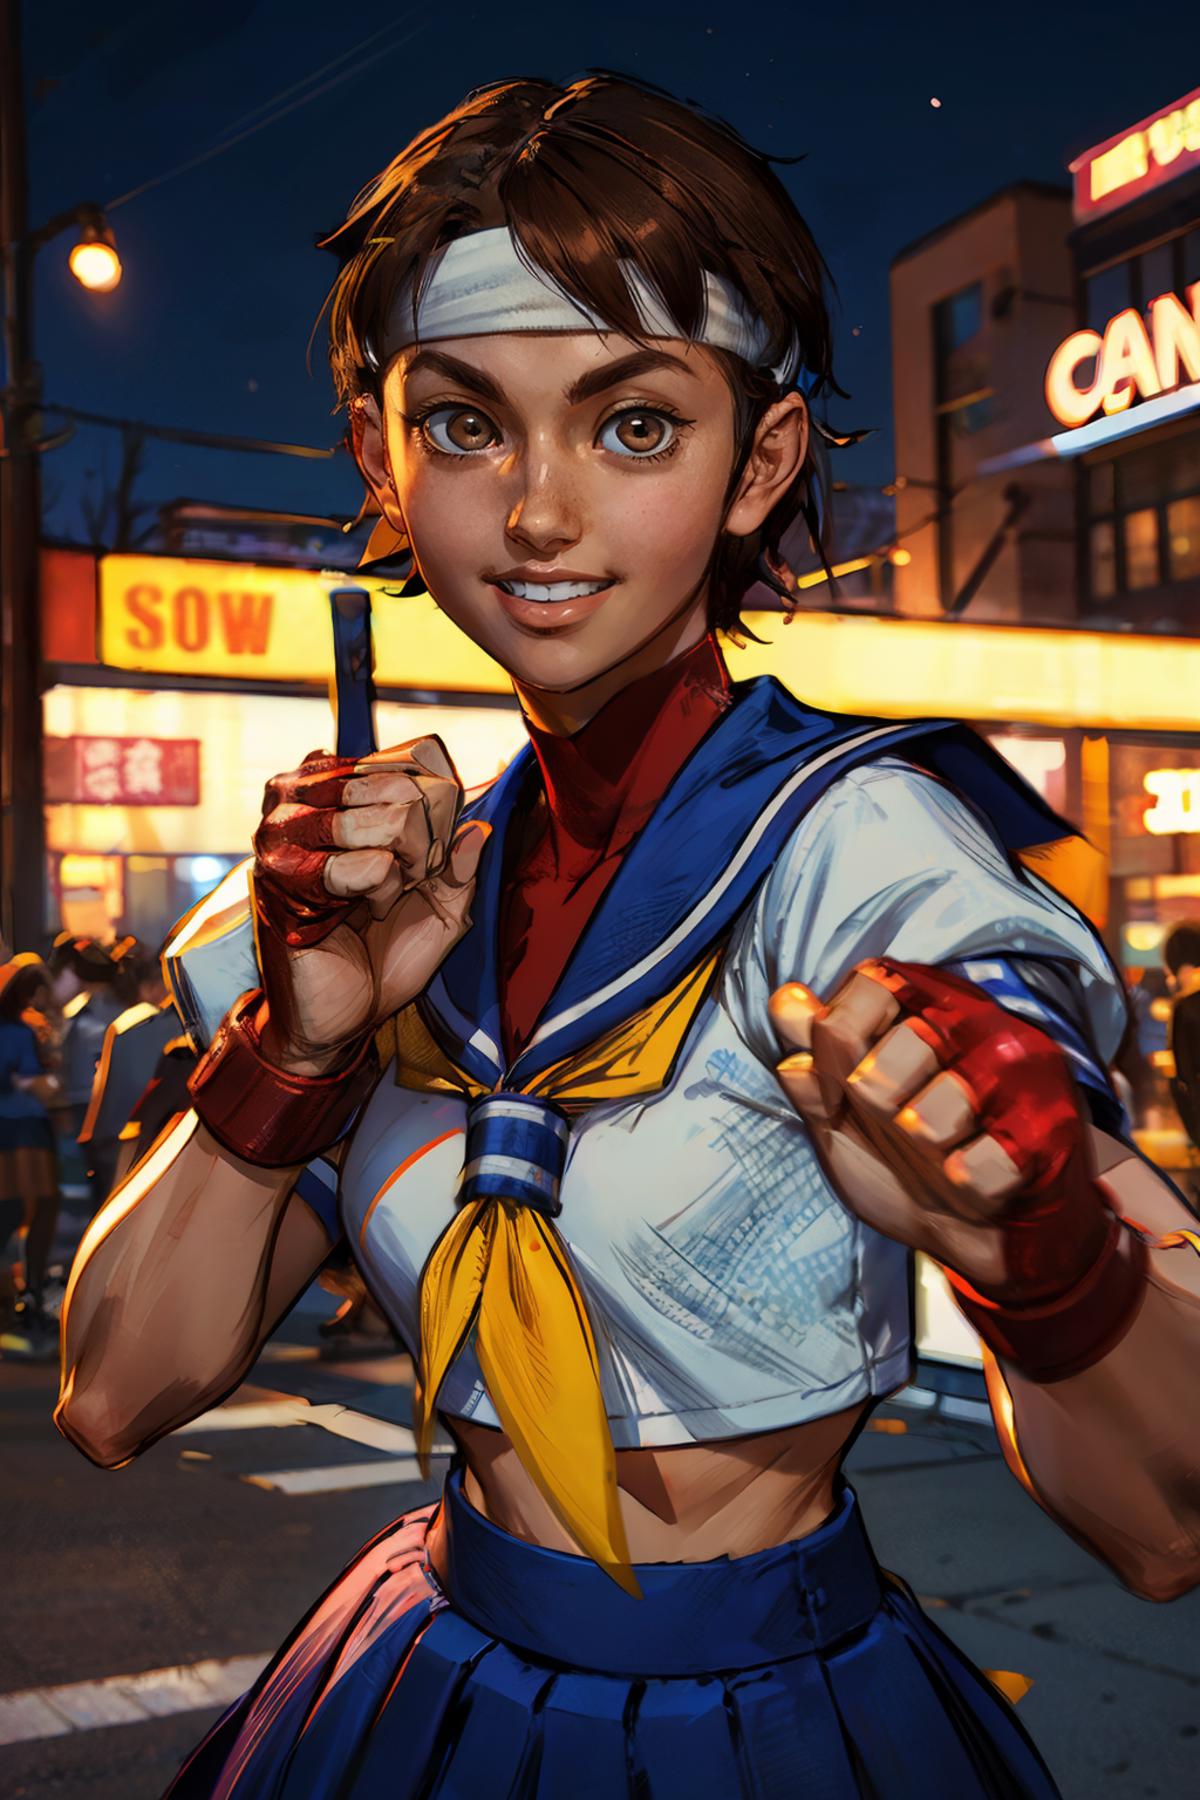 Sakura - Street Fighter (SF5/SF4 face) (Classic attire) image by wikkitikki